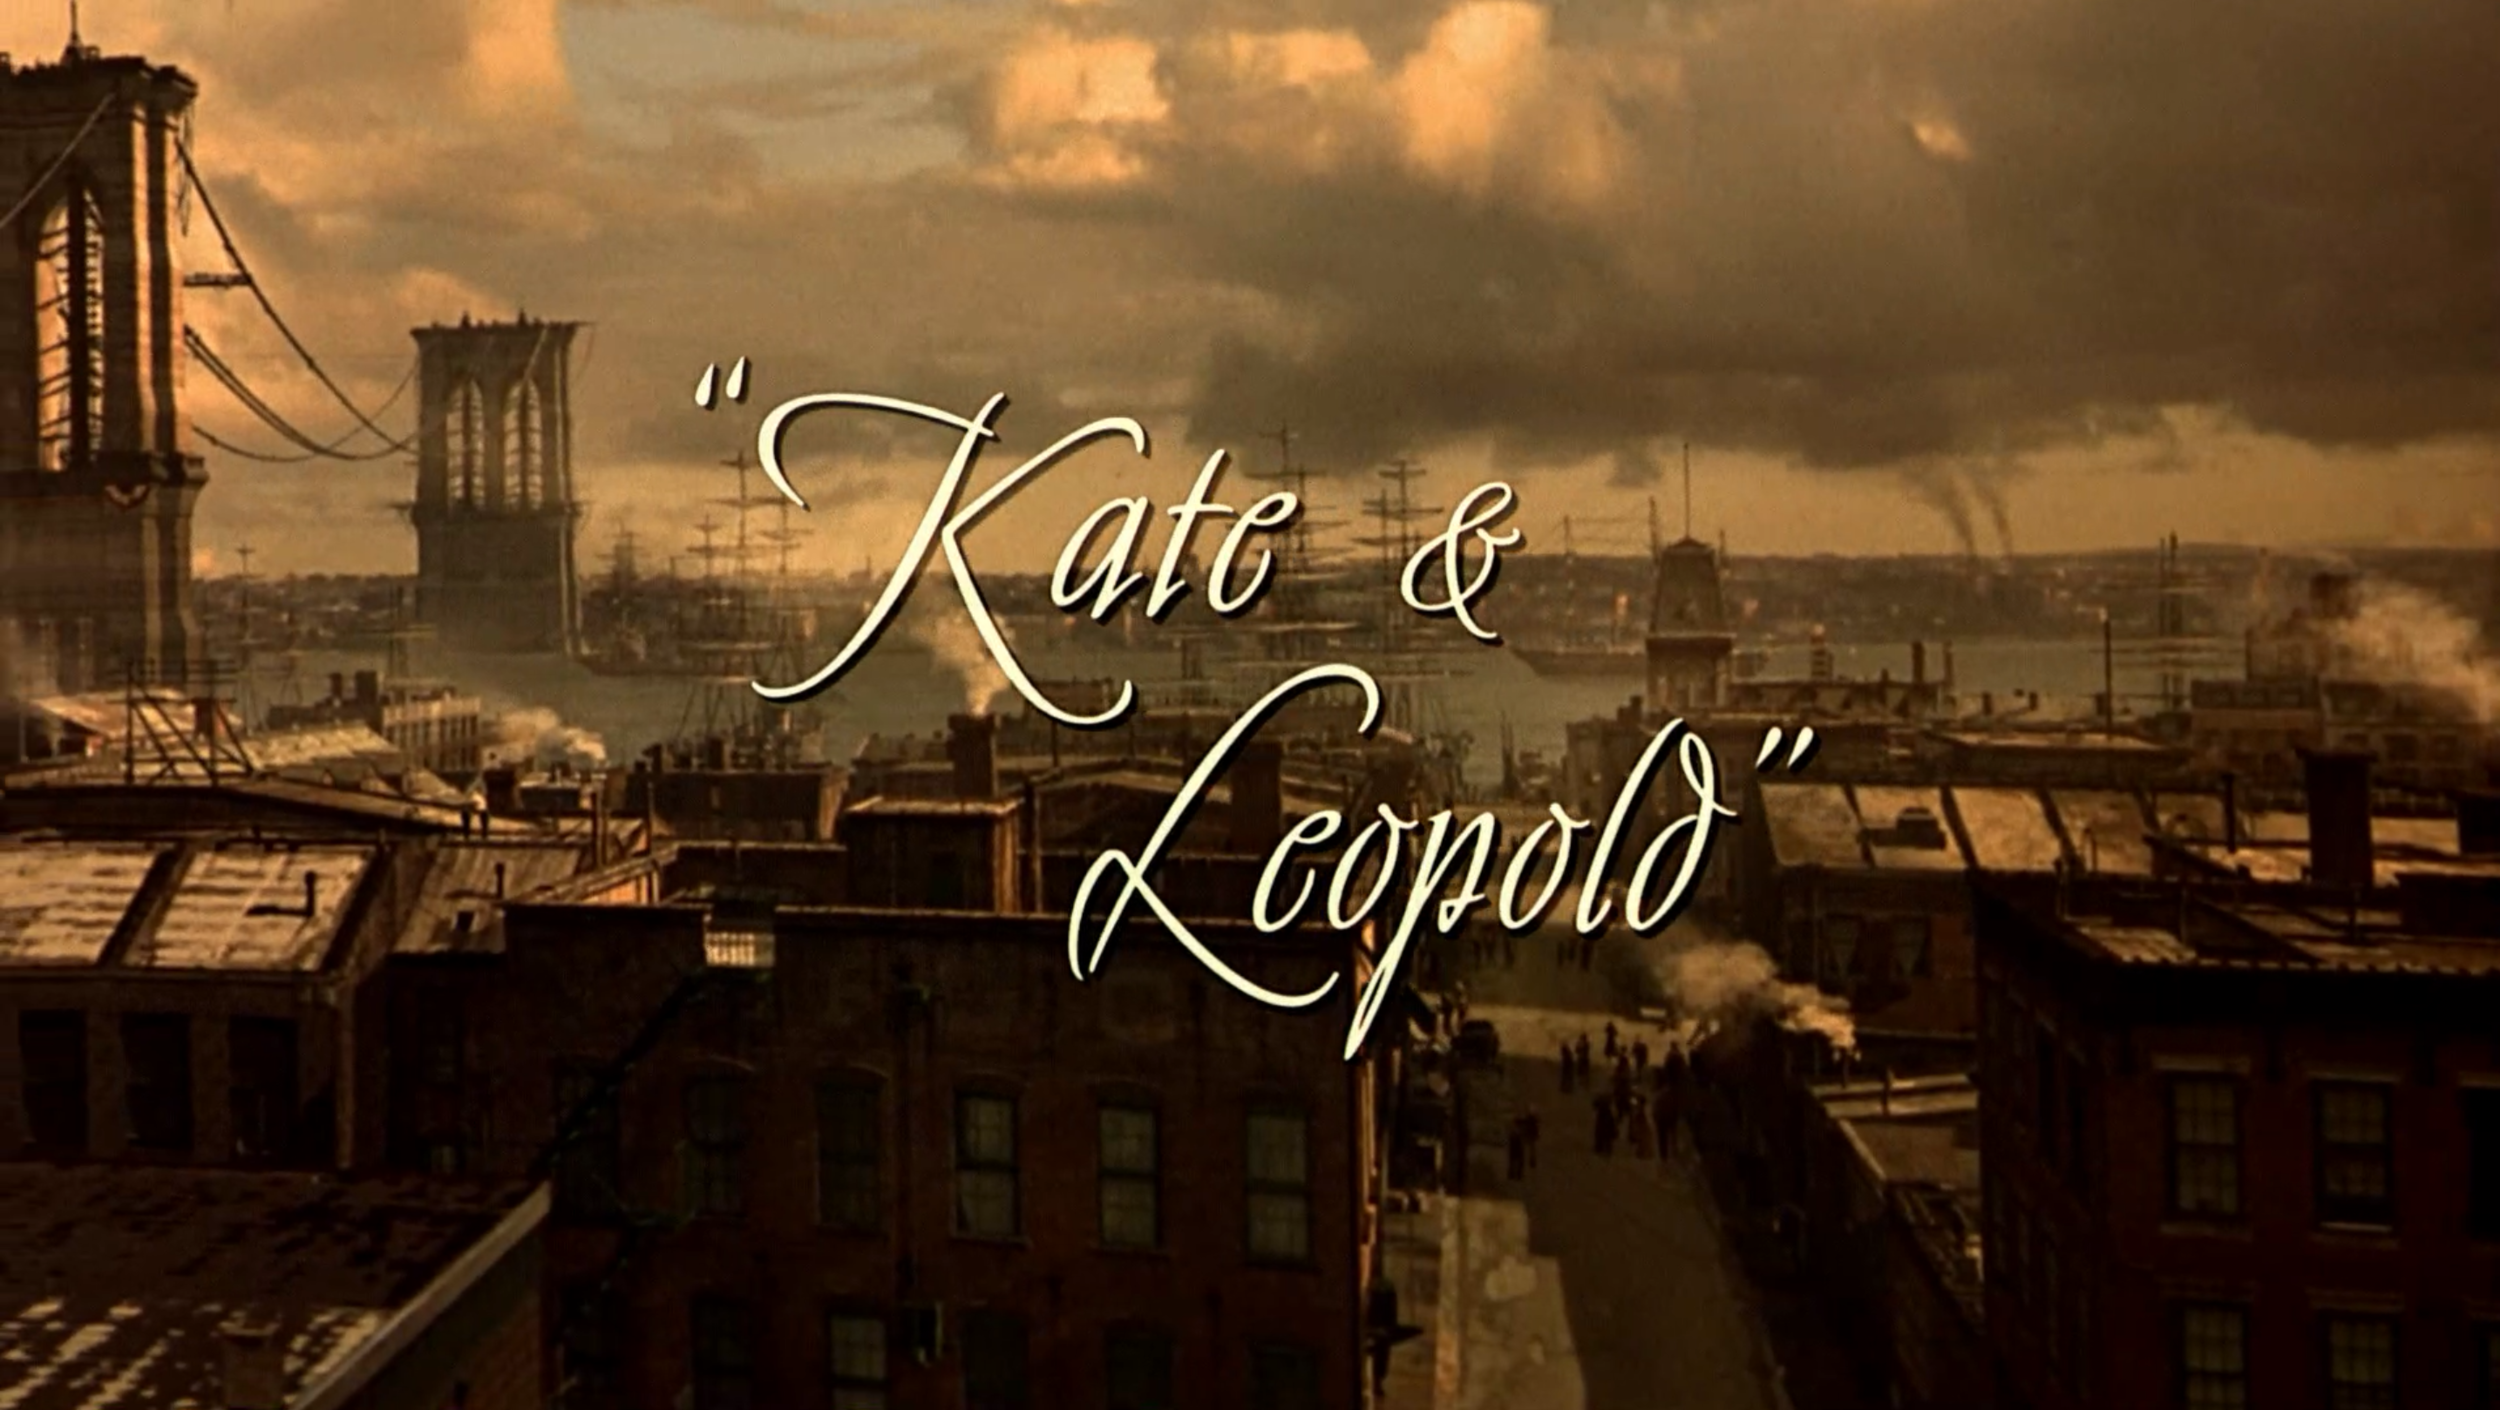   Kate &amp; Leopold (2001),  Miramax Films. 